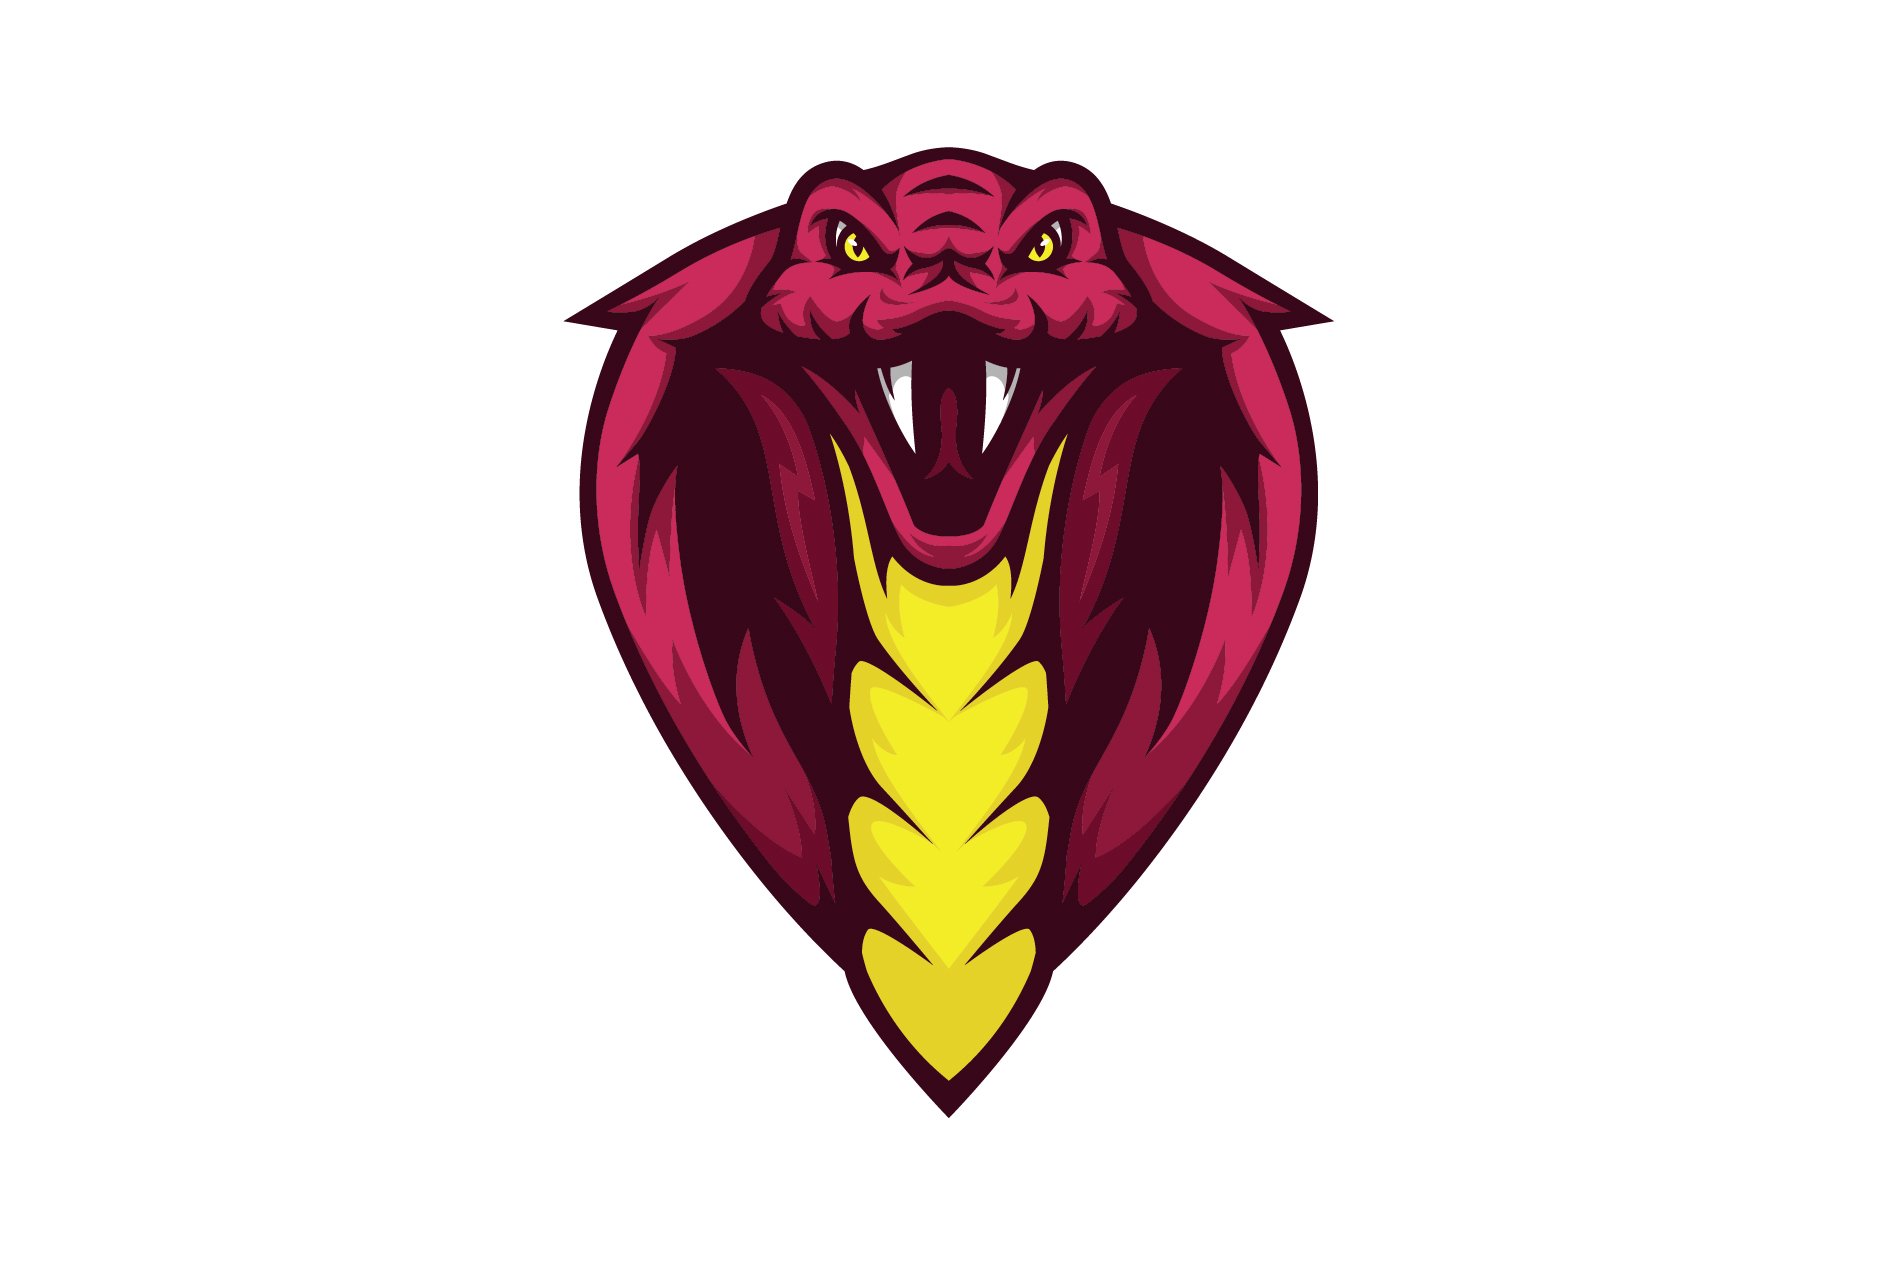 Snake Head Mascot & Esport Logo preview image.